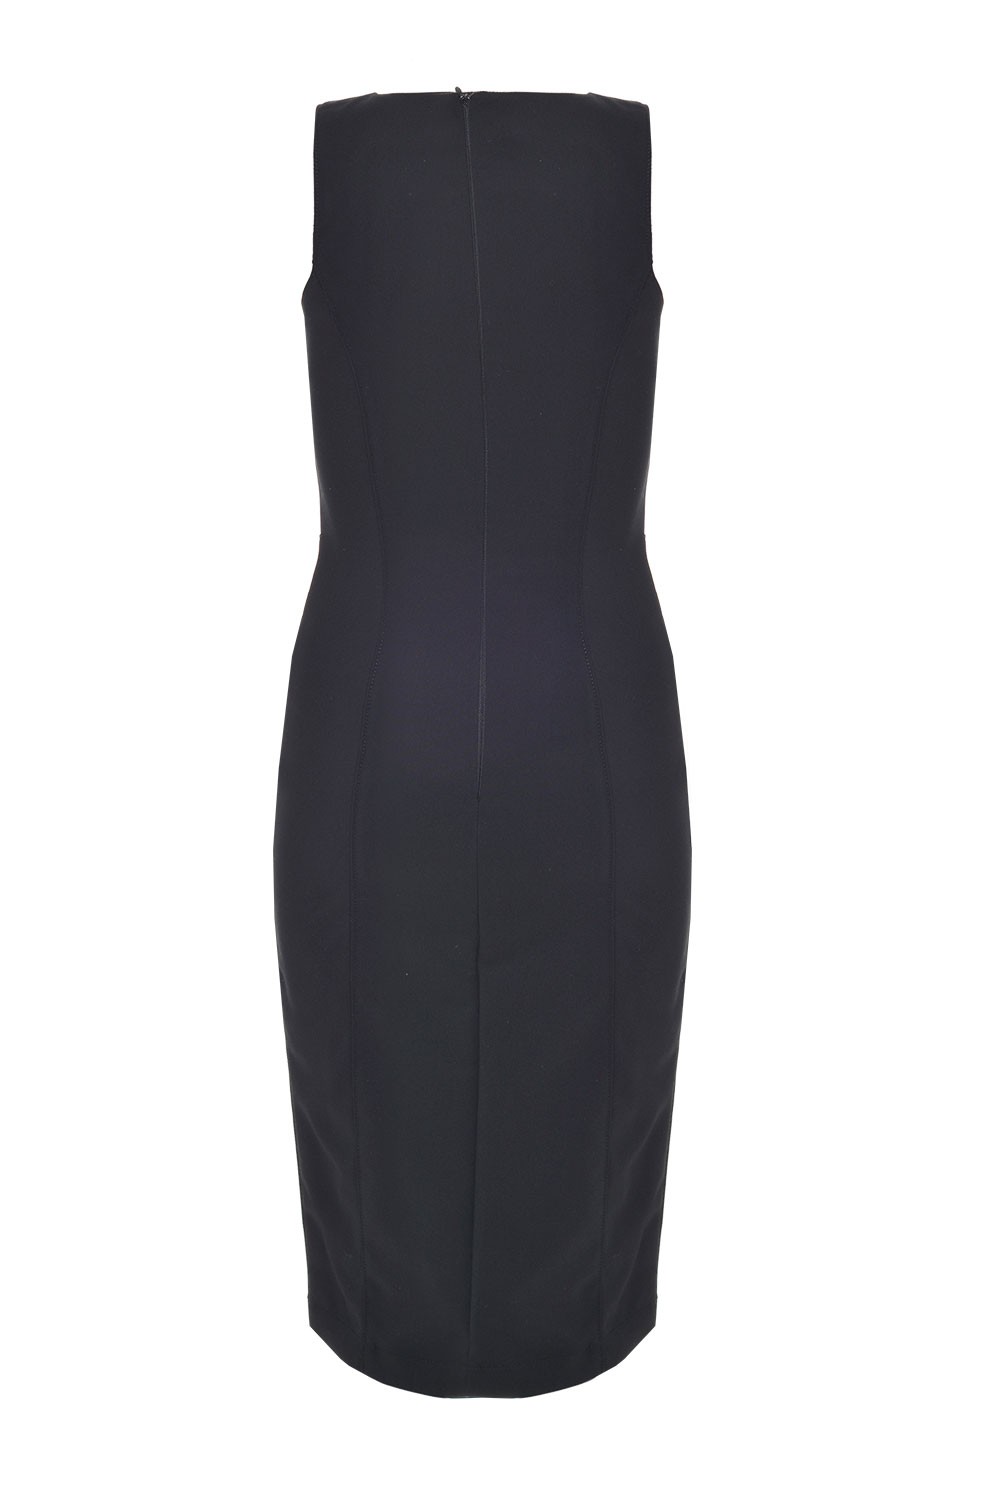 Vero Moda Victoria SL Bodycon Dress in Black | iCLOTHING